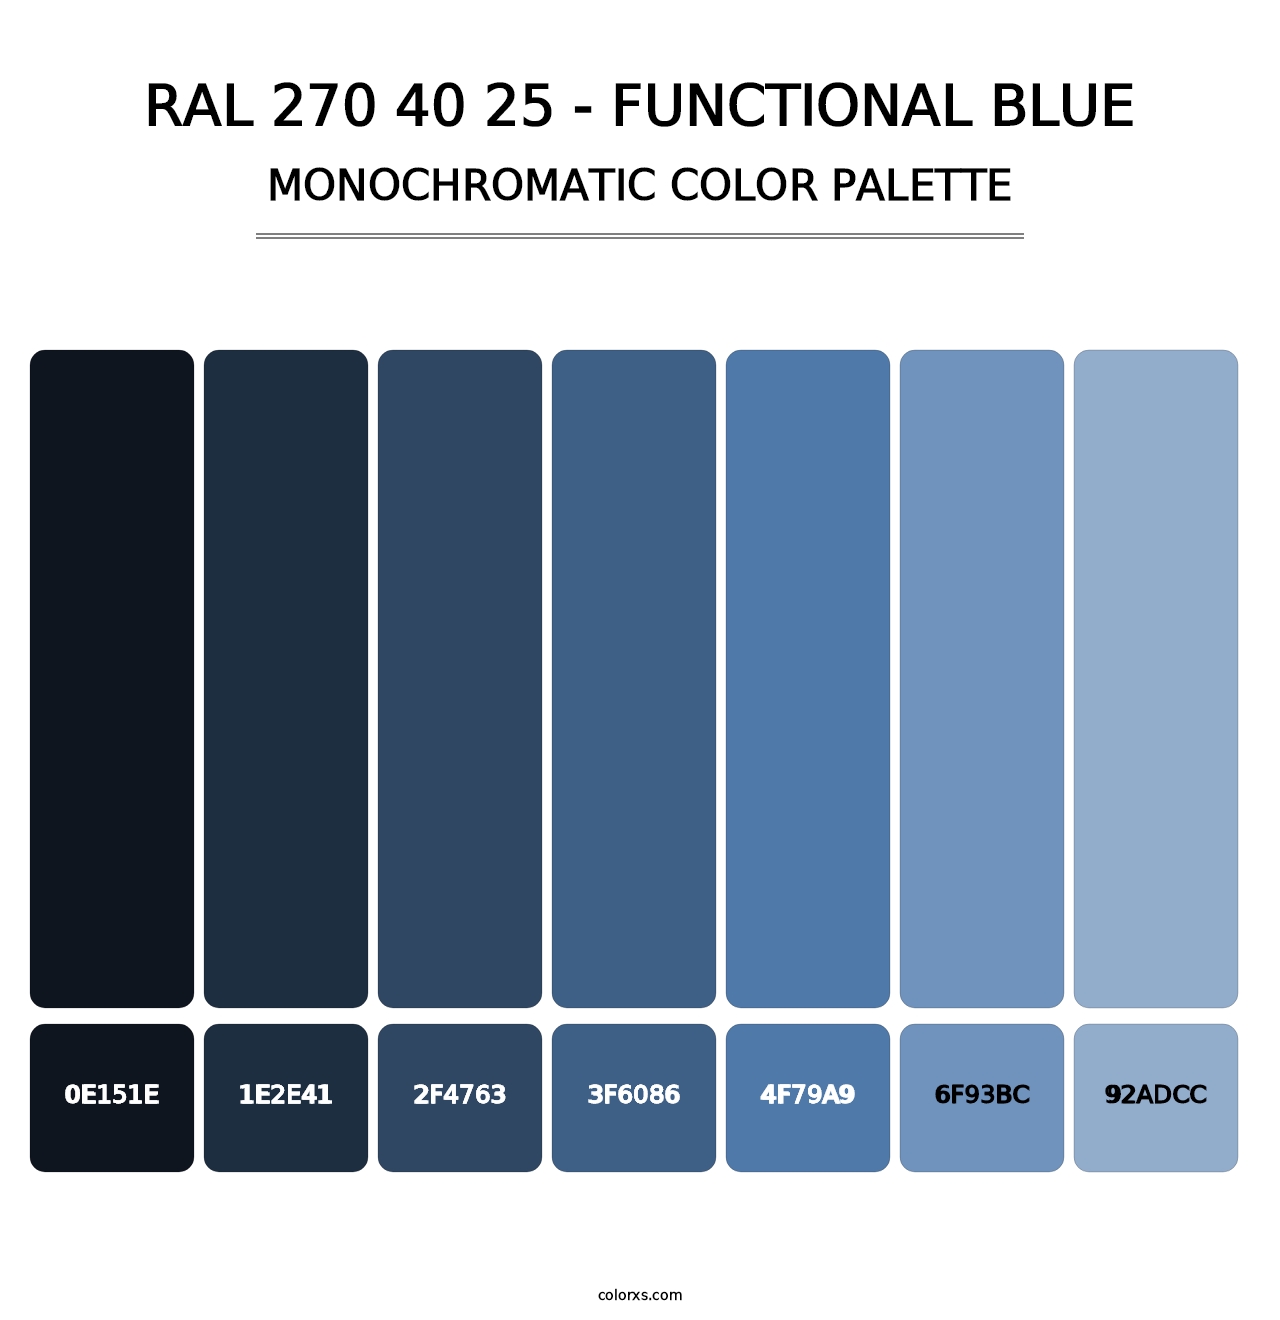 RAL 270 40 25 - Functional Blue - Monochromatic Color Palette